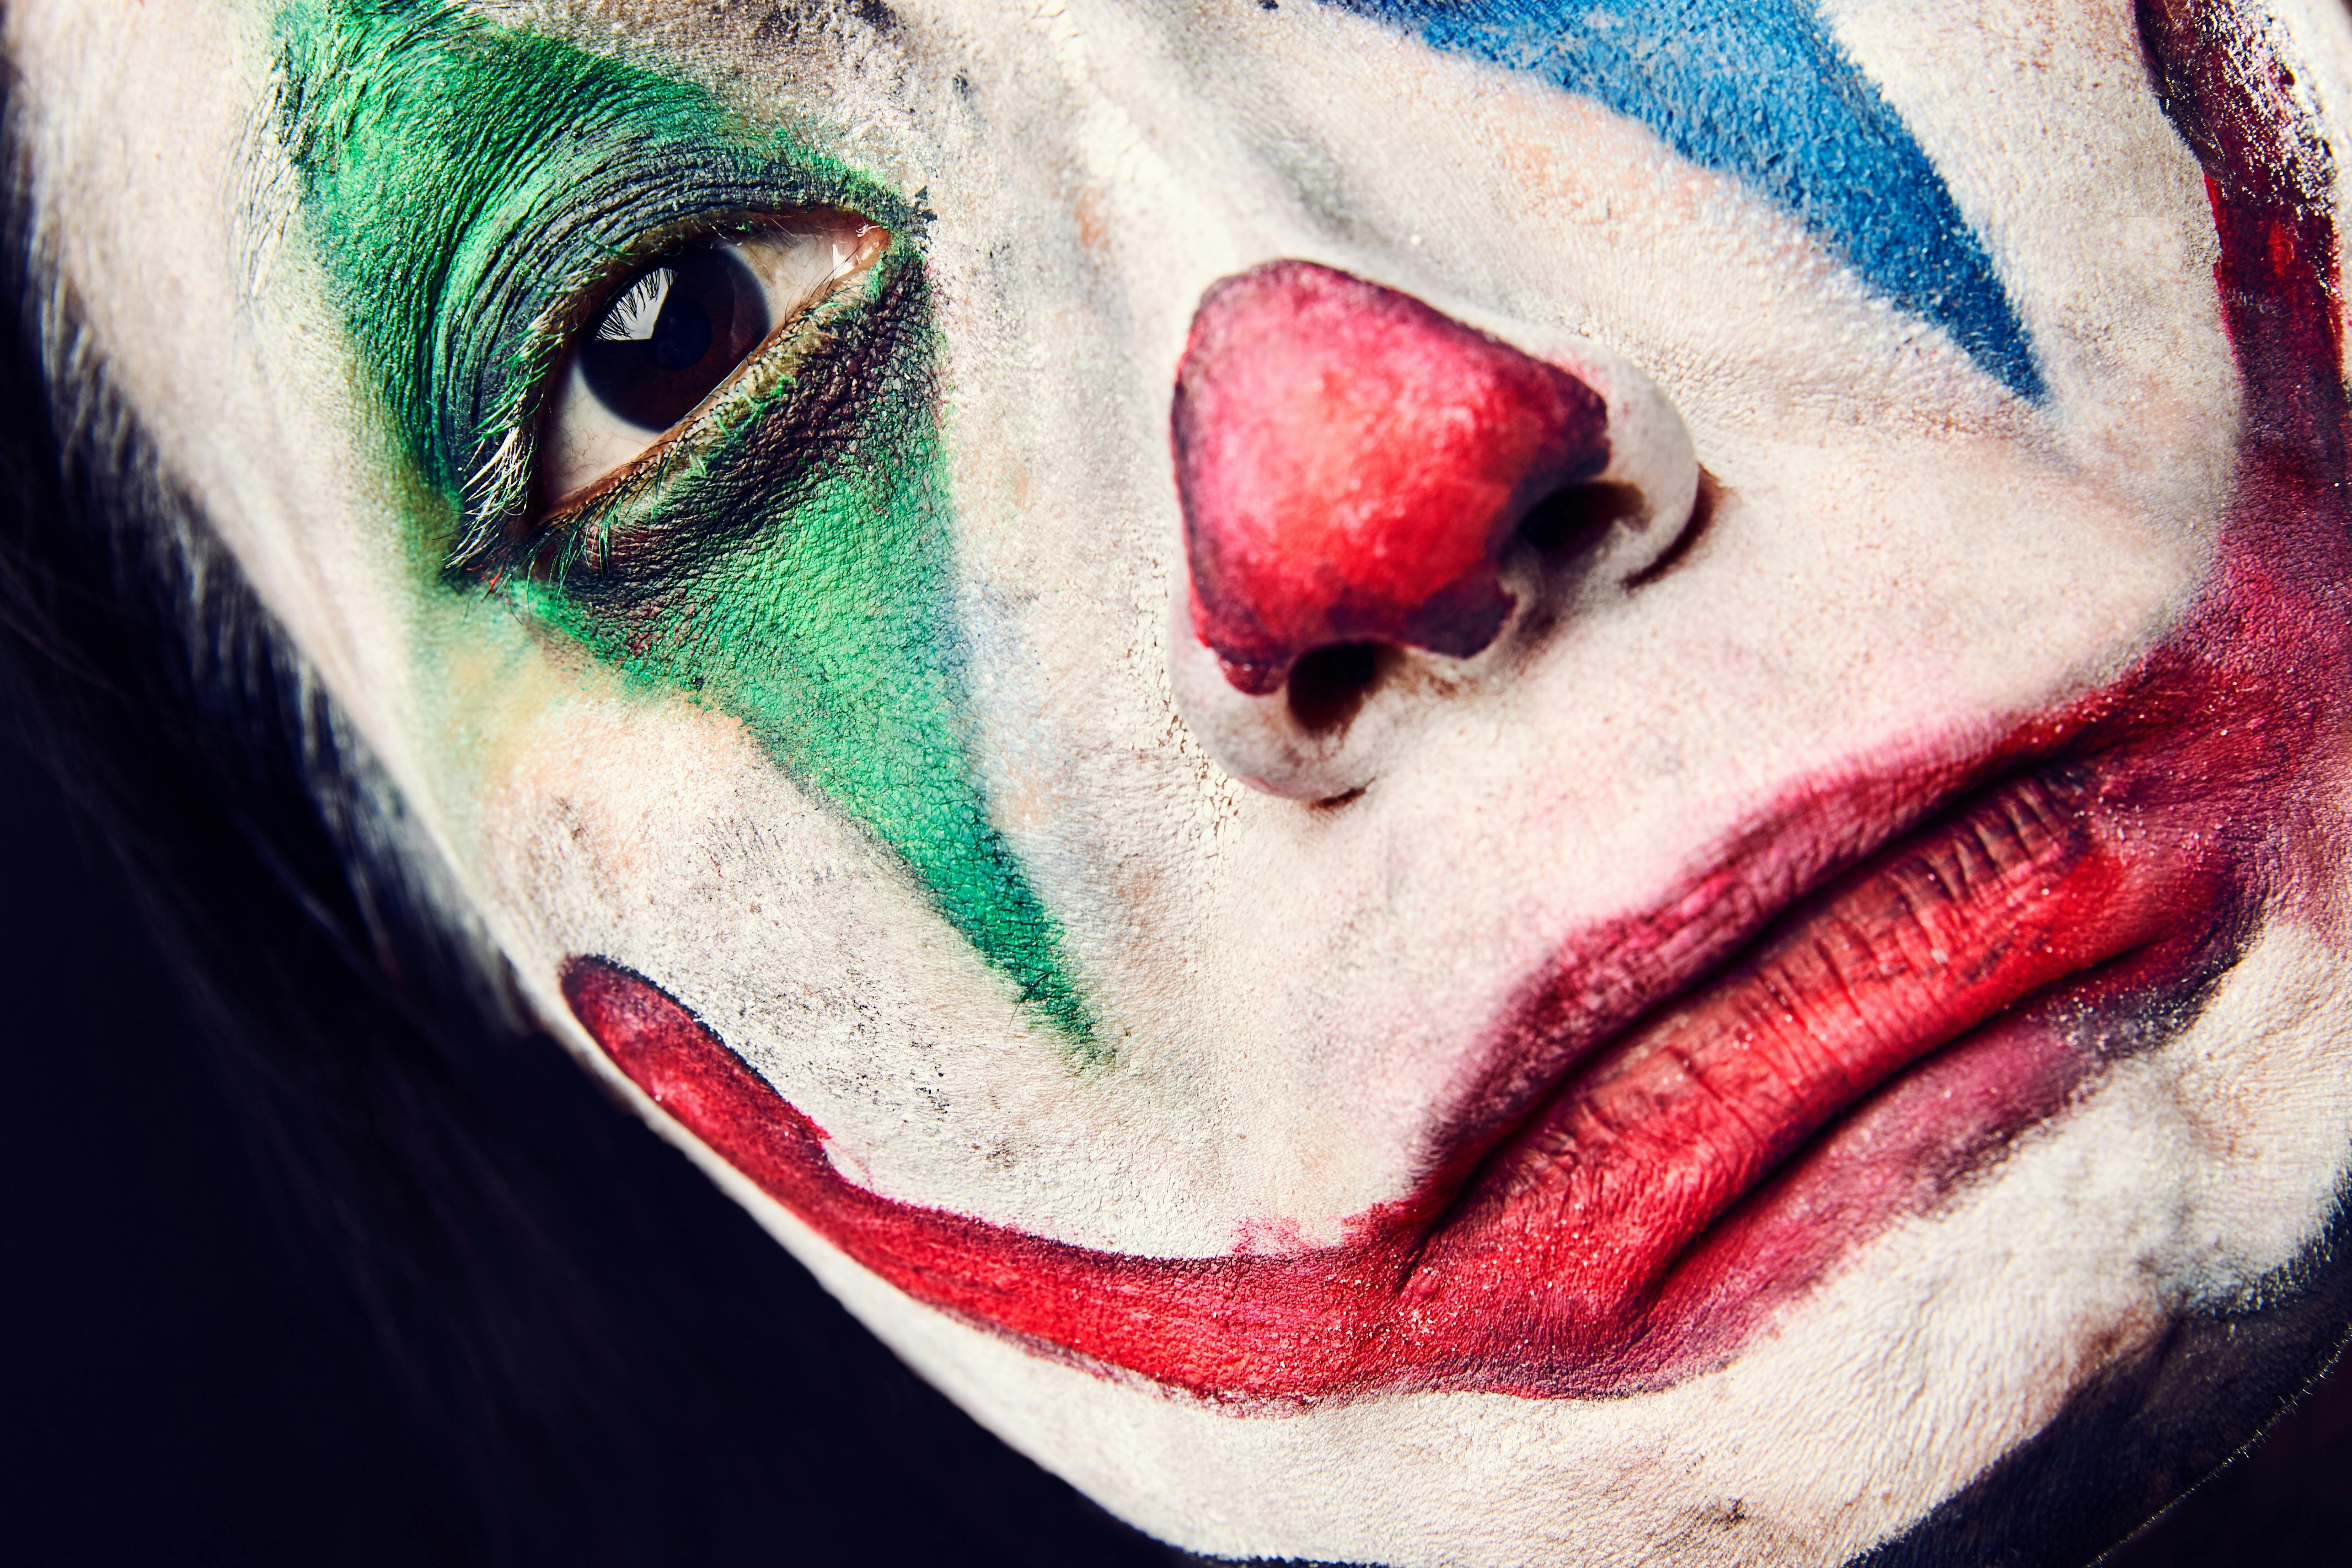 Clown Halloween Man Portrait Closeup Of An Evil Clowns Face White Face  Makeup Stock Photo - Download Image Now - iStock